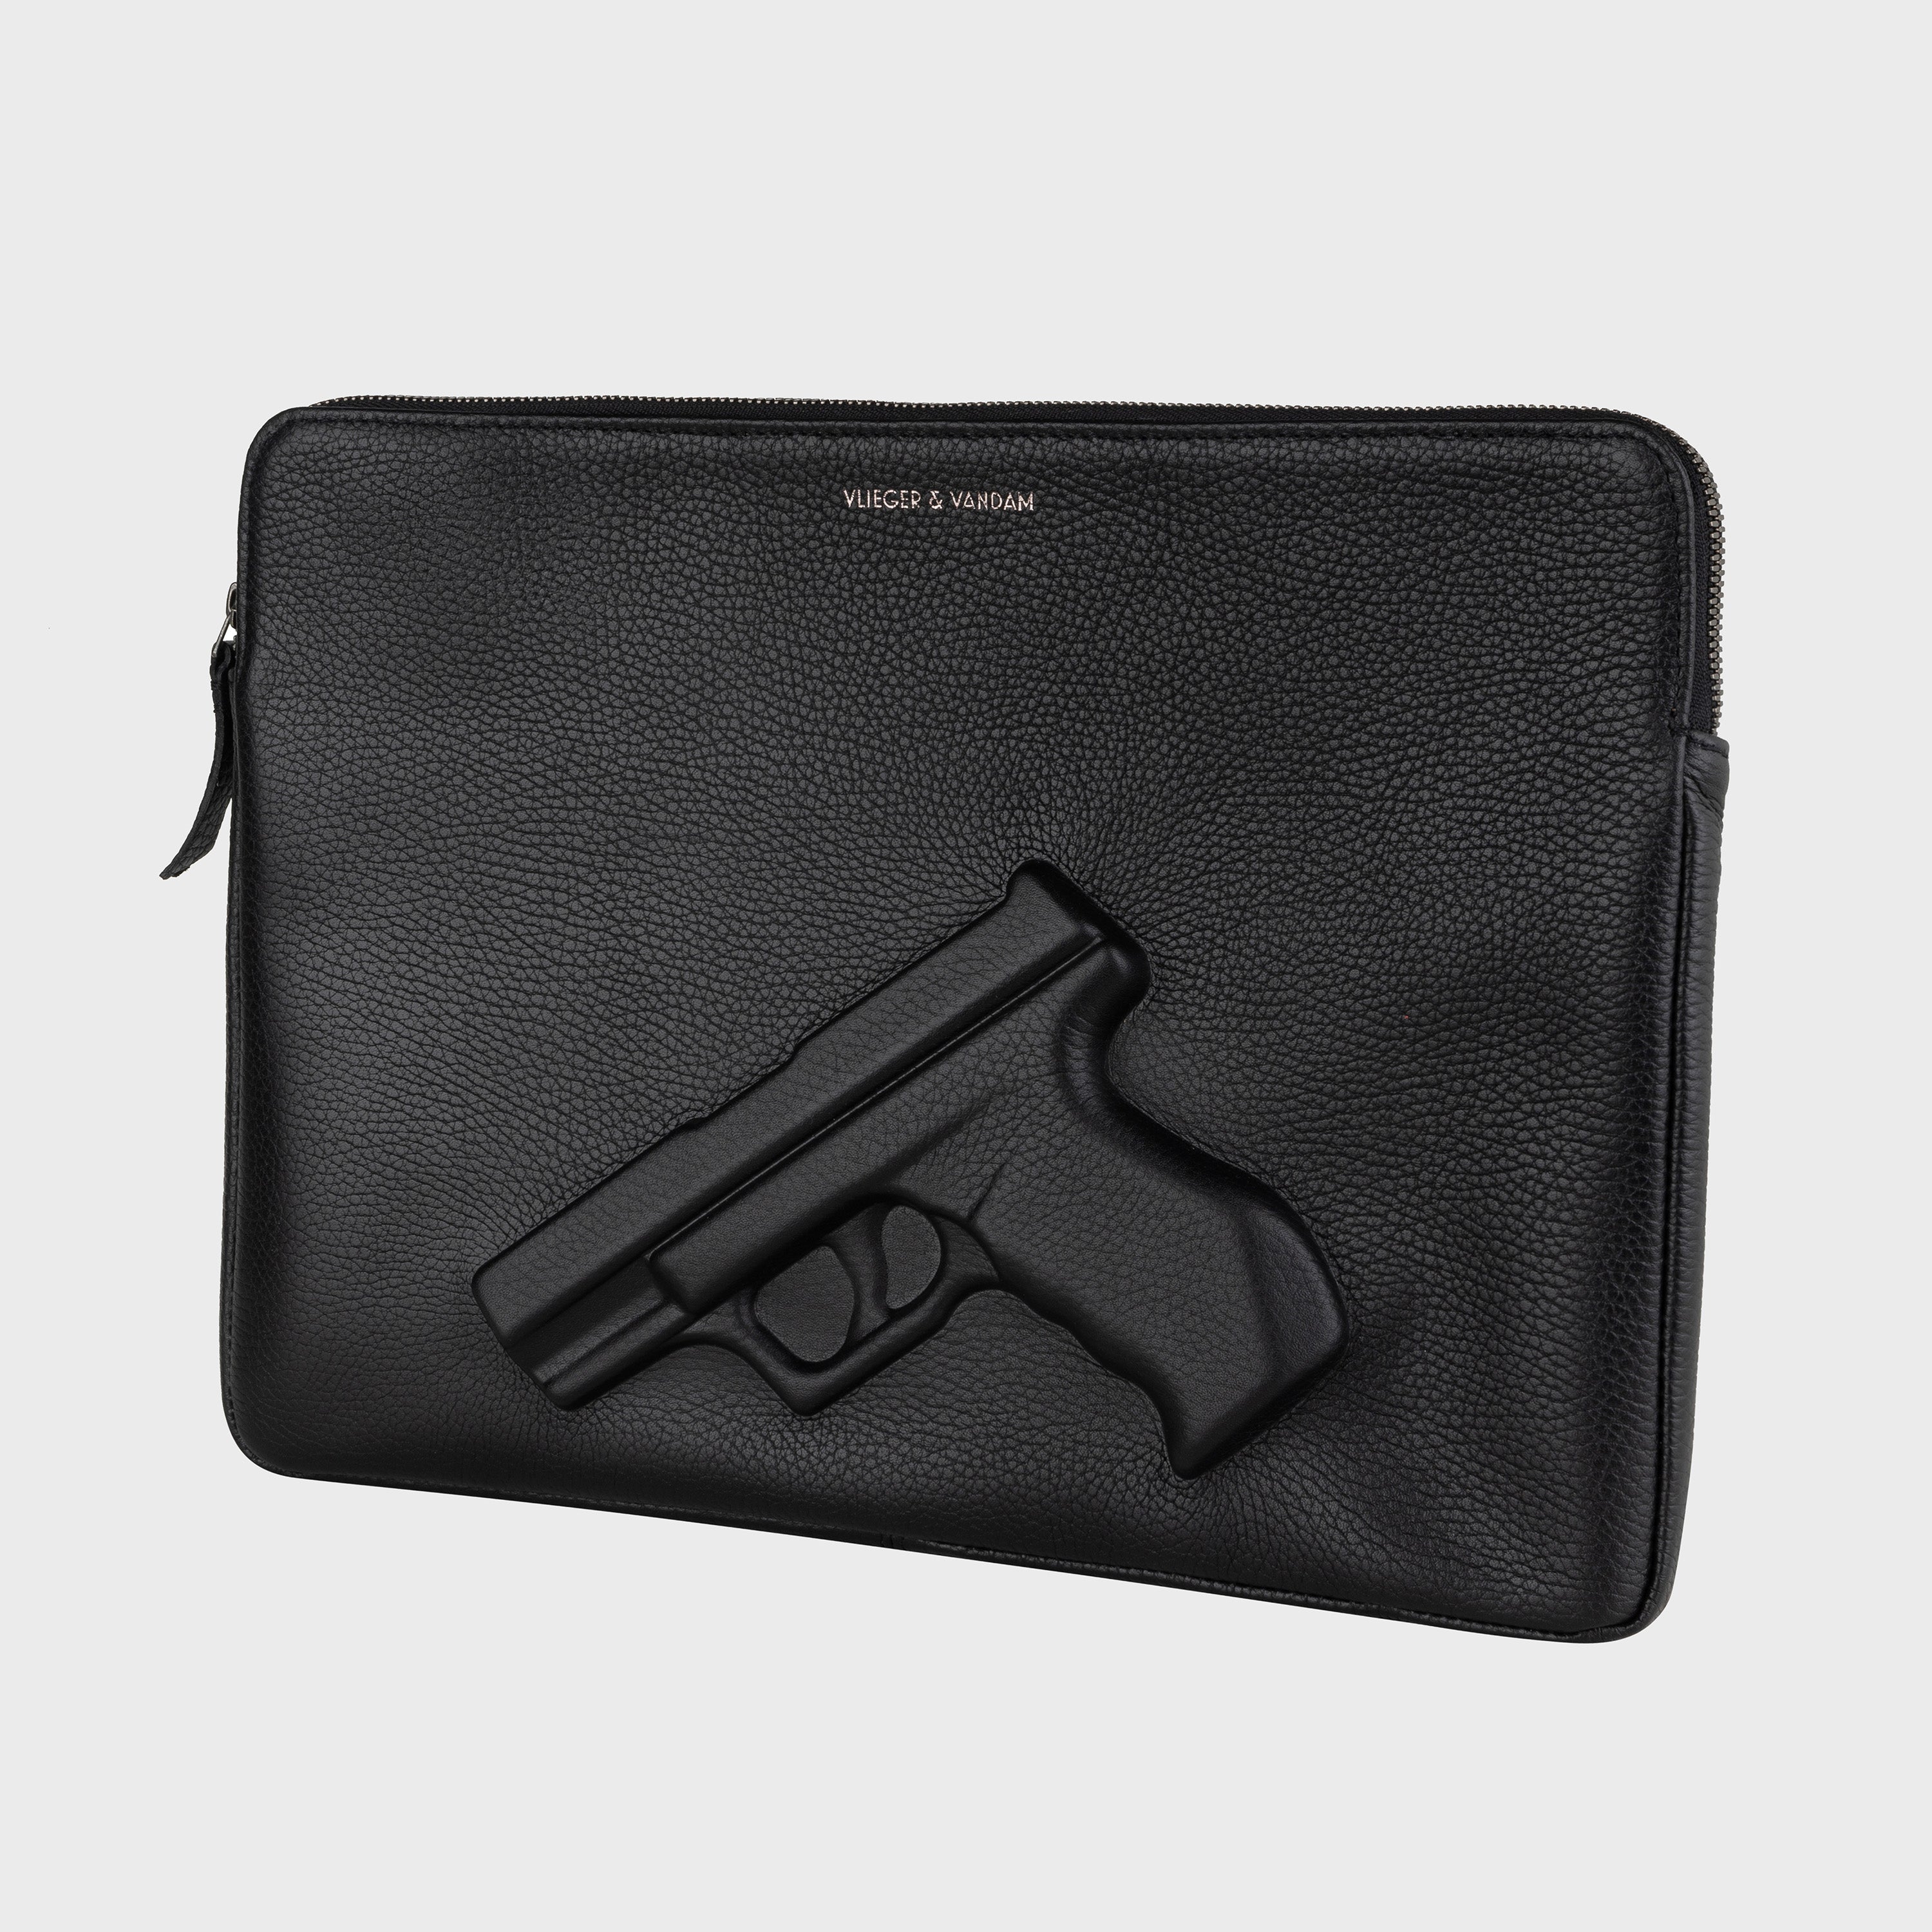 Vlieger & Vandam - Clutch Gun Black, embossed leather gun bag